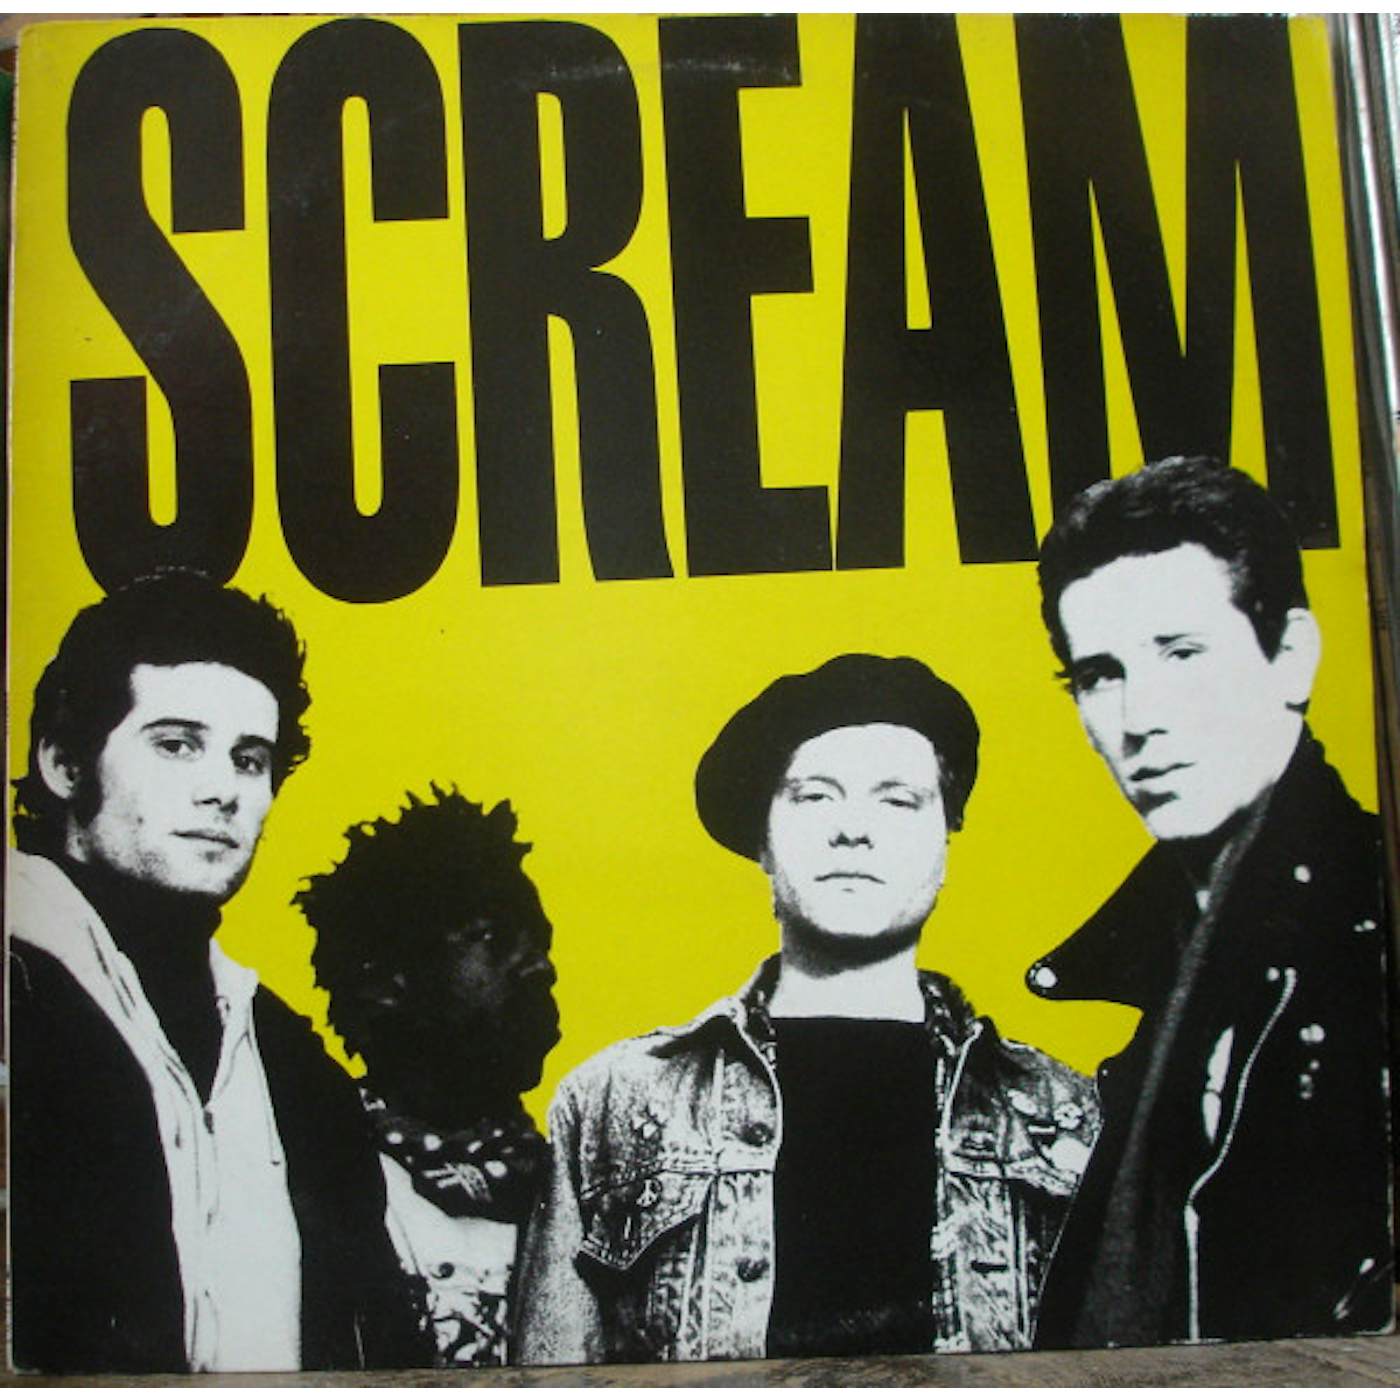 Scream This Side Up Vinyl Record